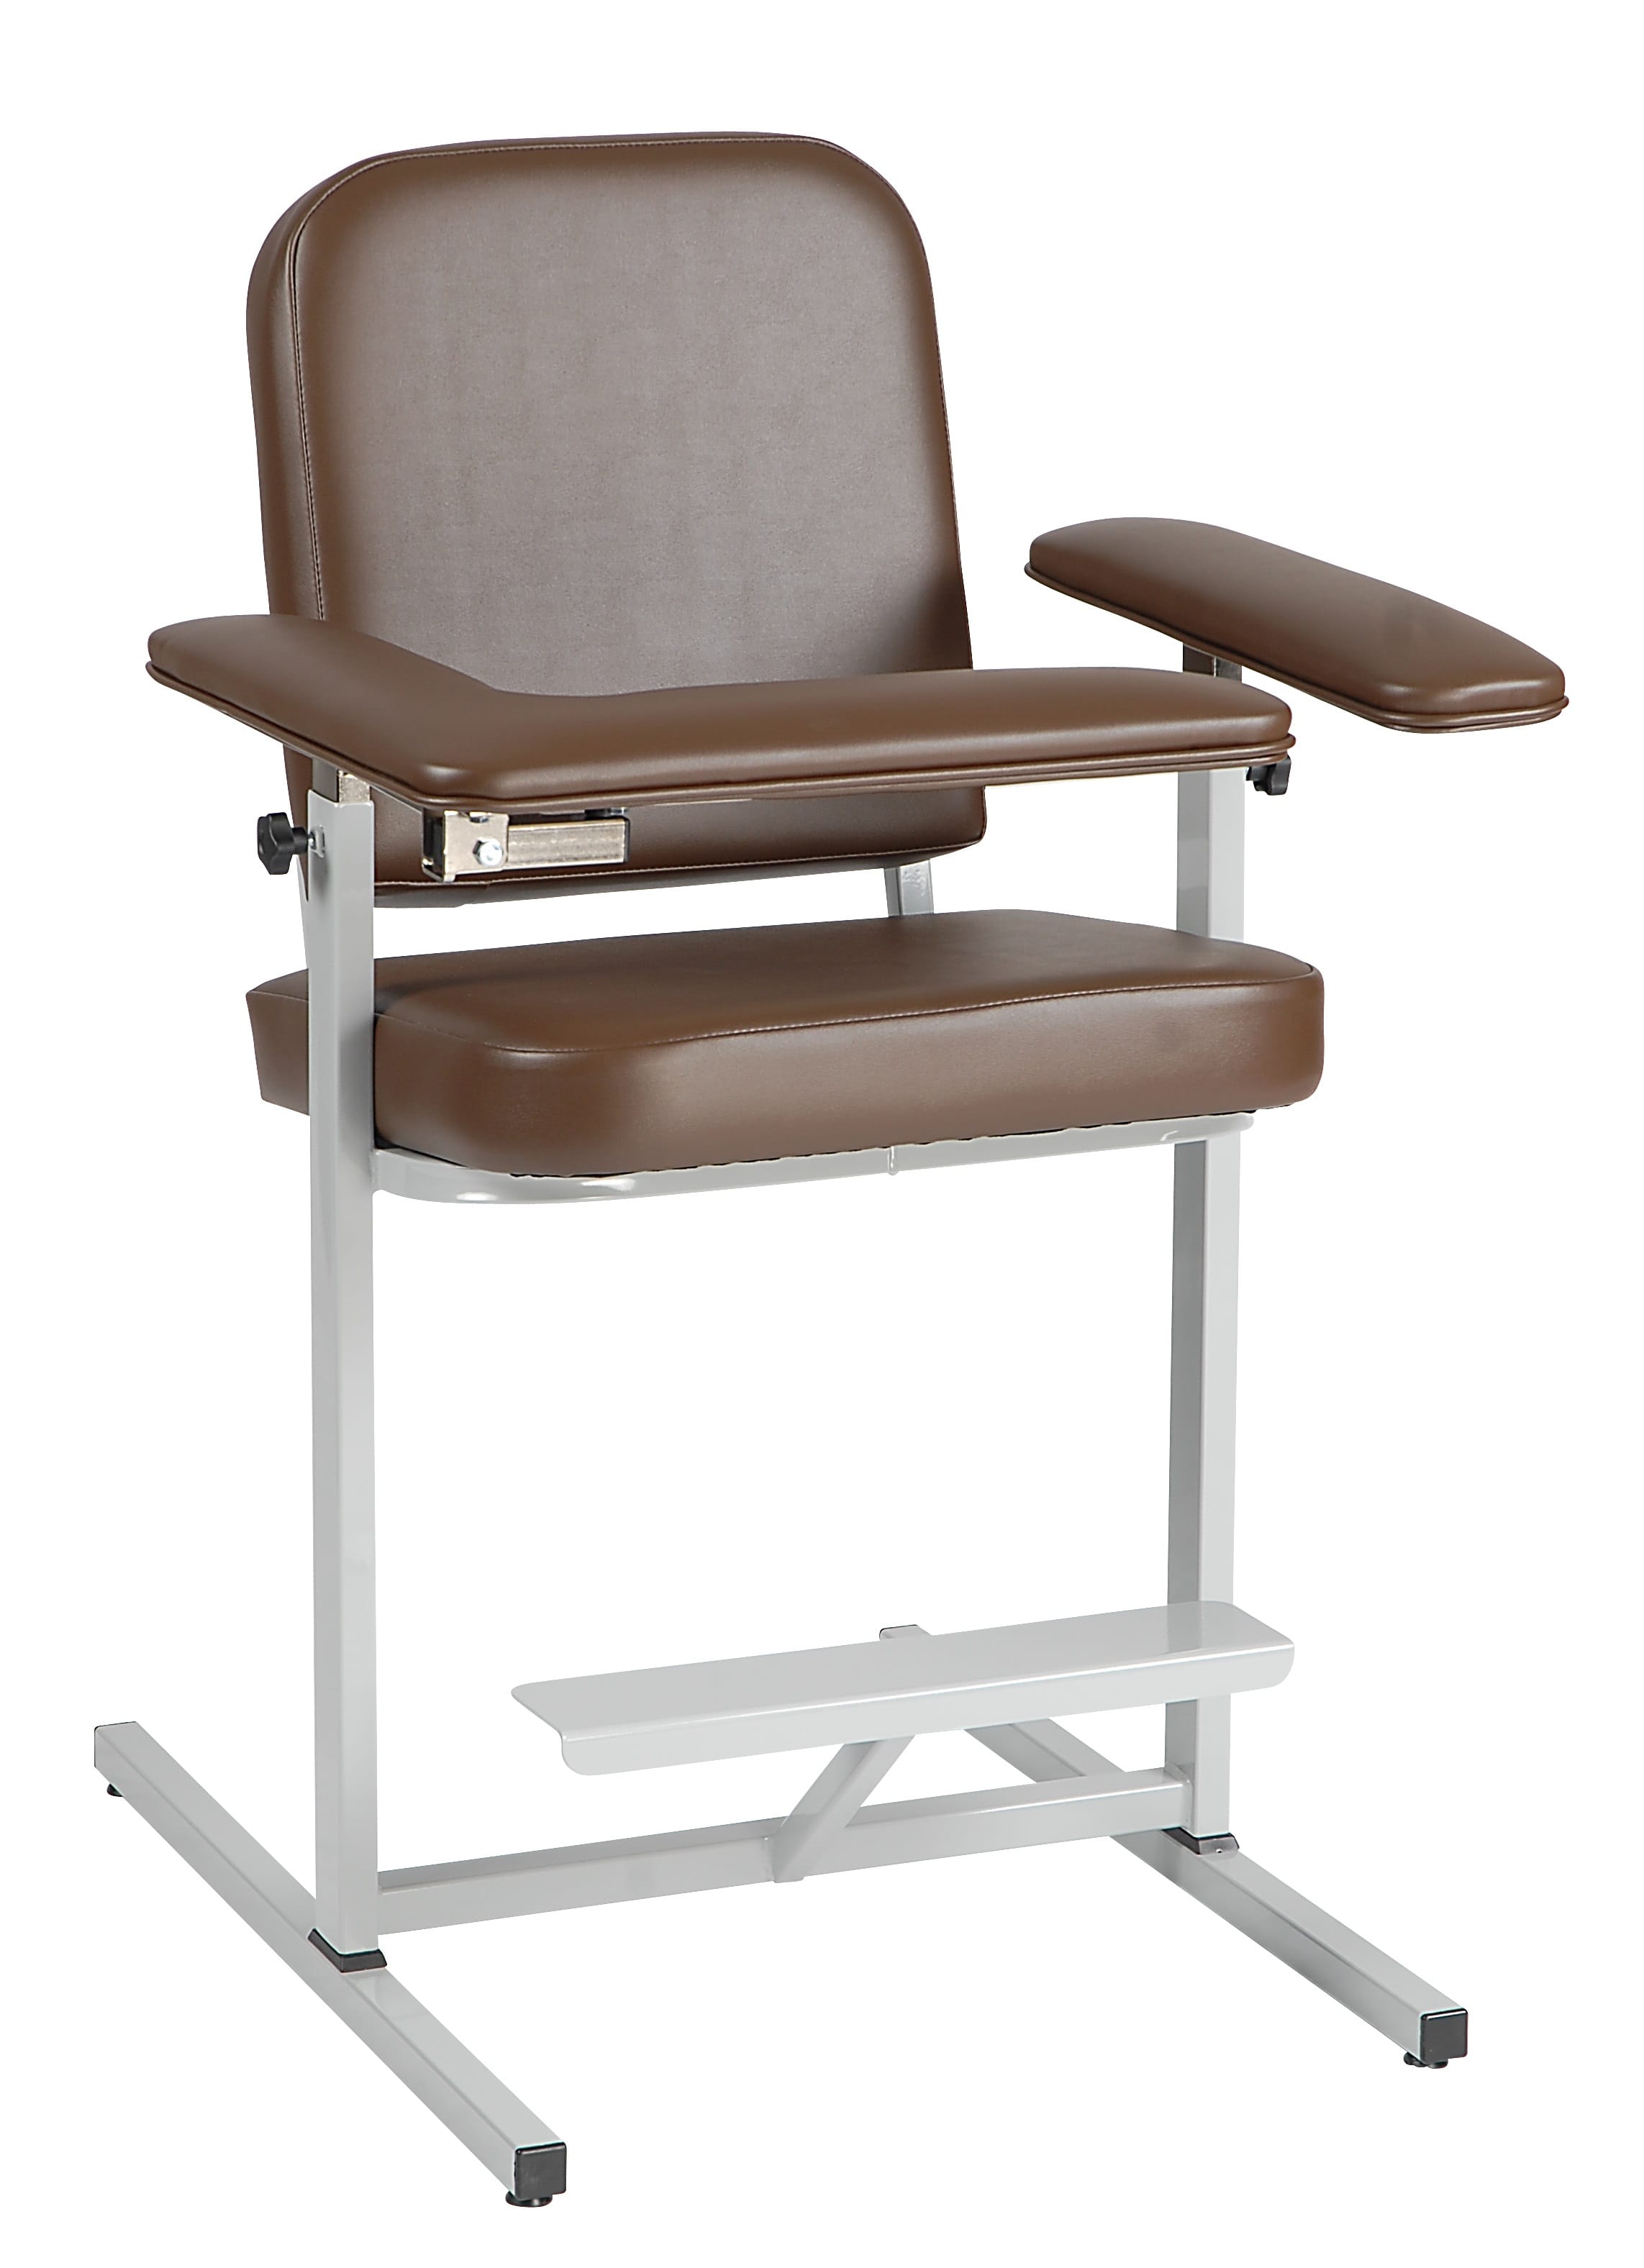  Narrow Tall Height Blood Draw Chair 1202LU/XT/N